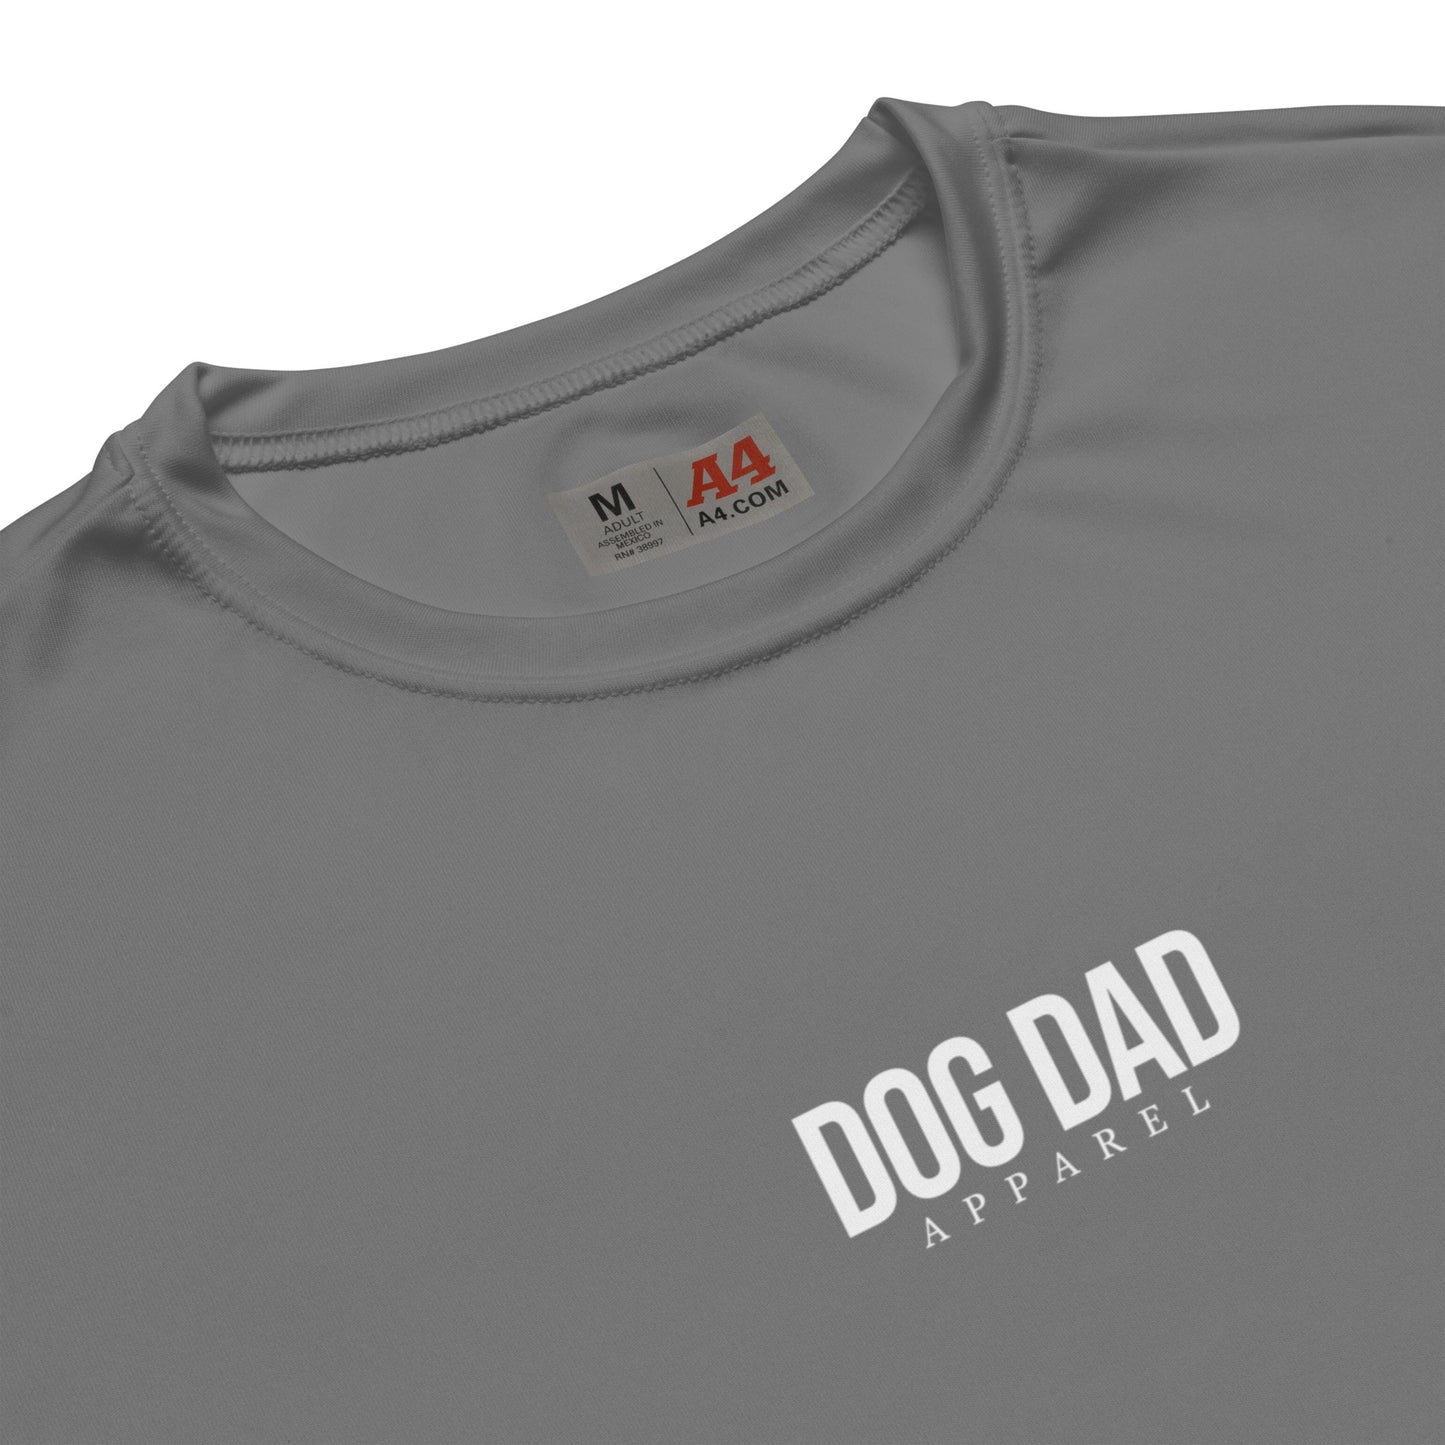 Dog Dad Athletic Tee - Grey/White